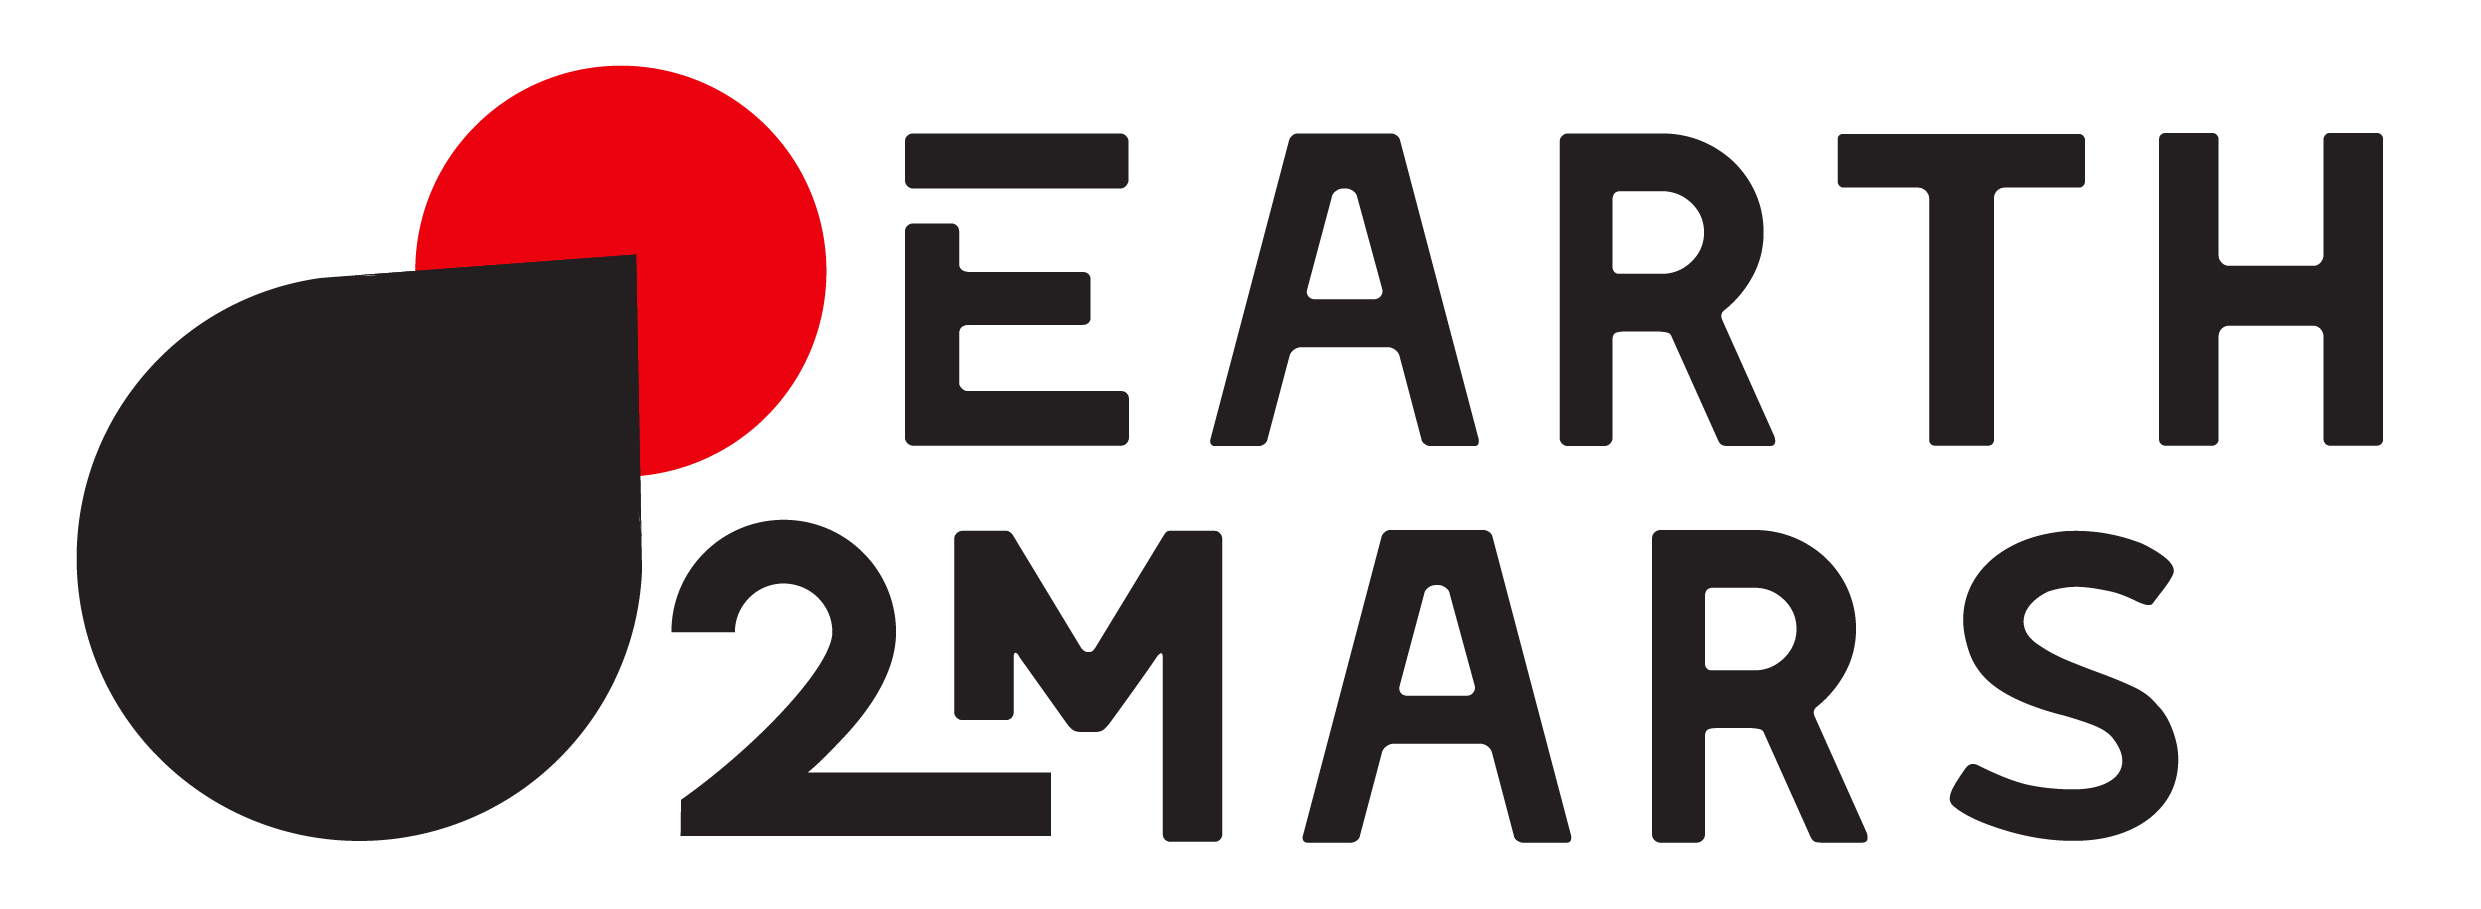 Earth2Mars logo